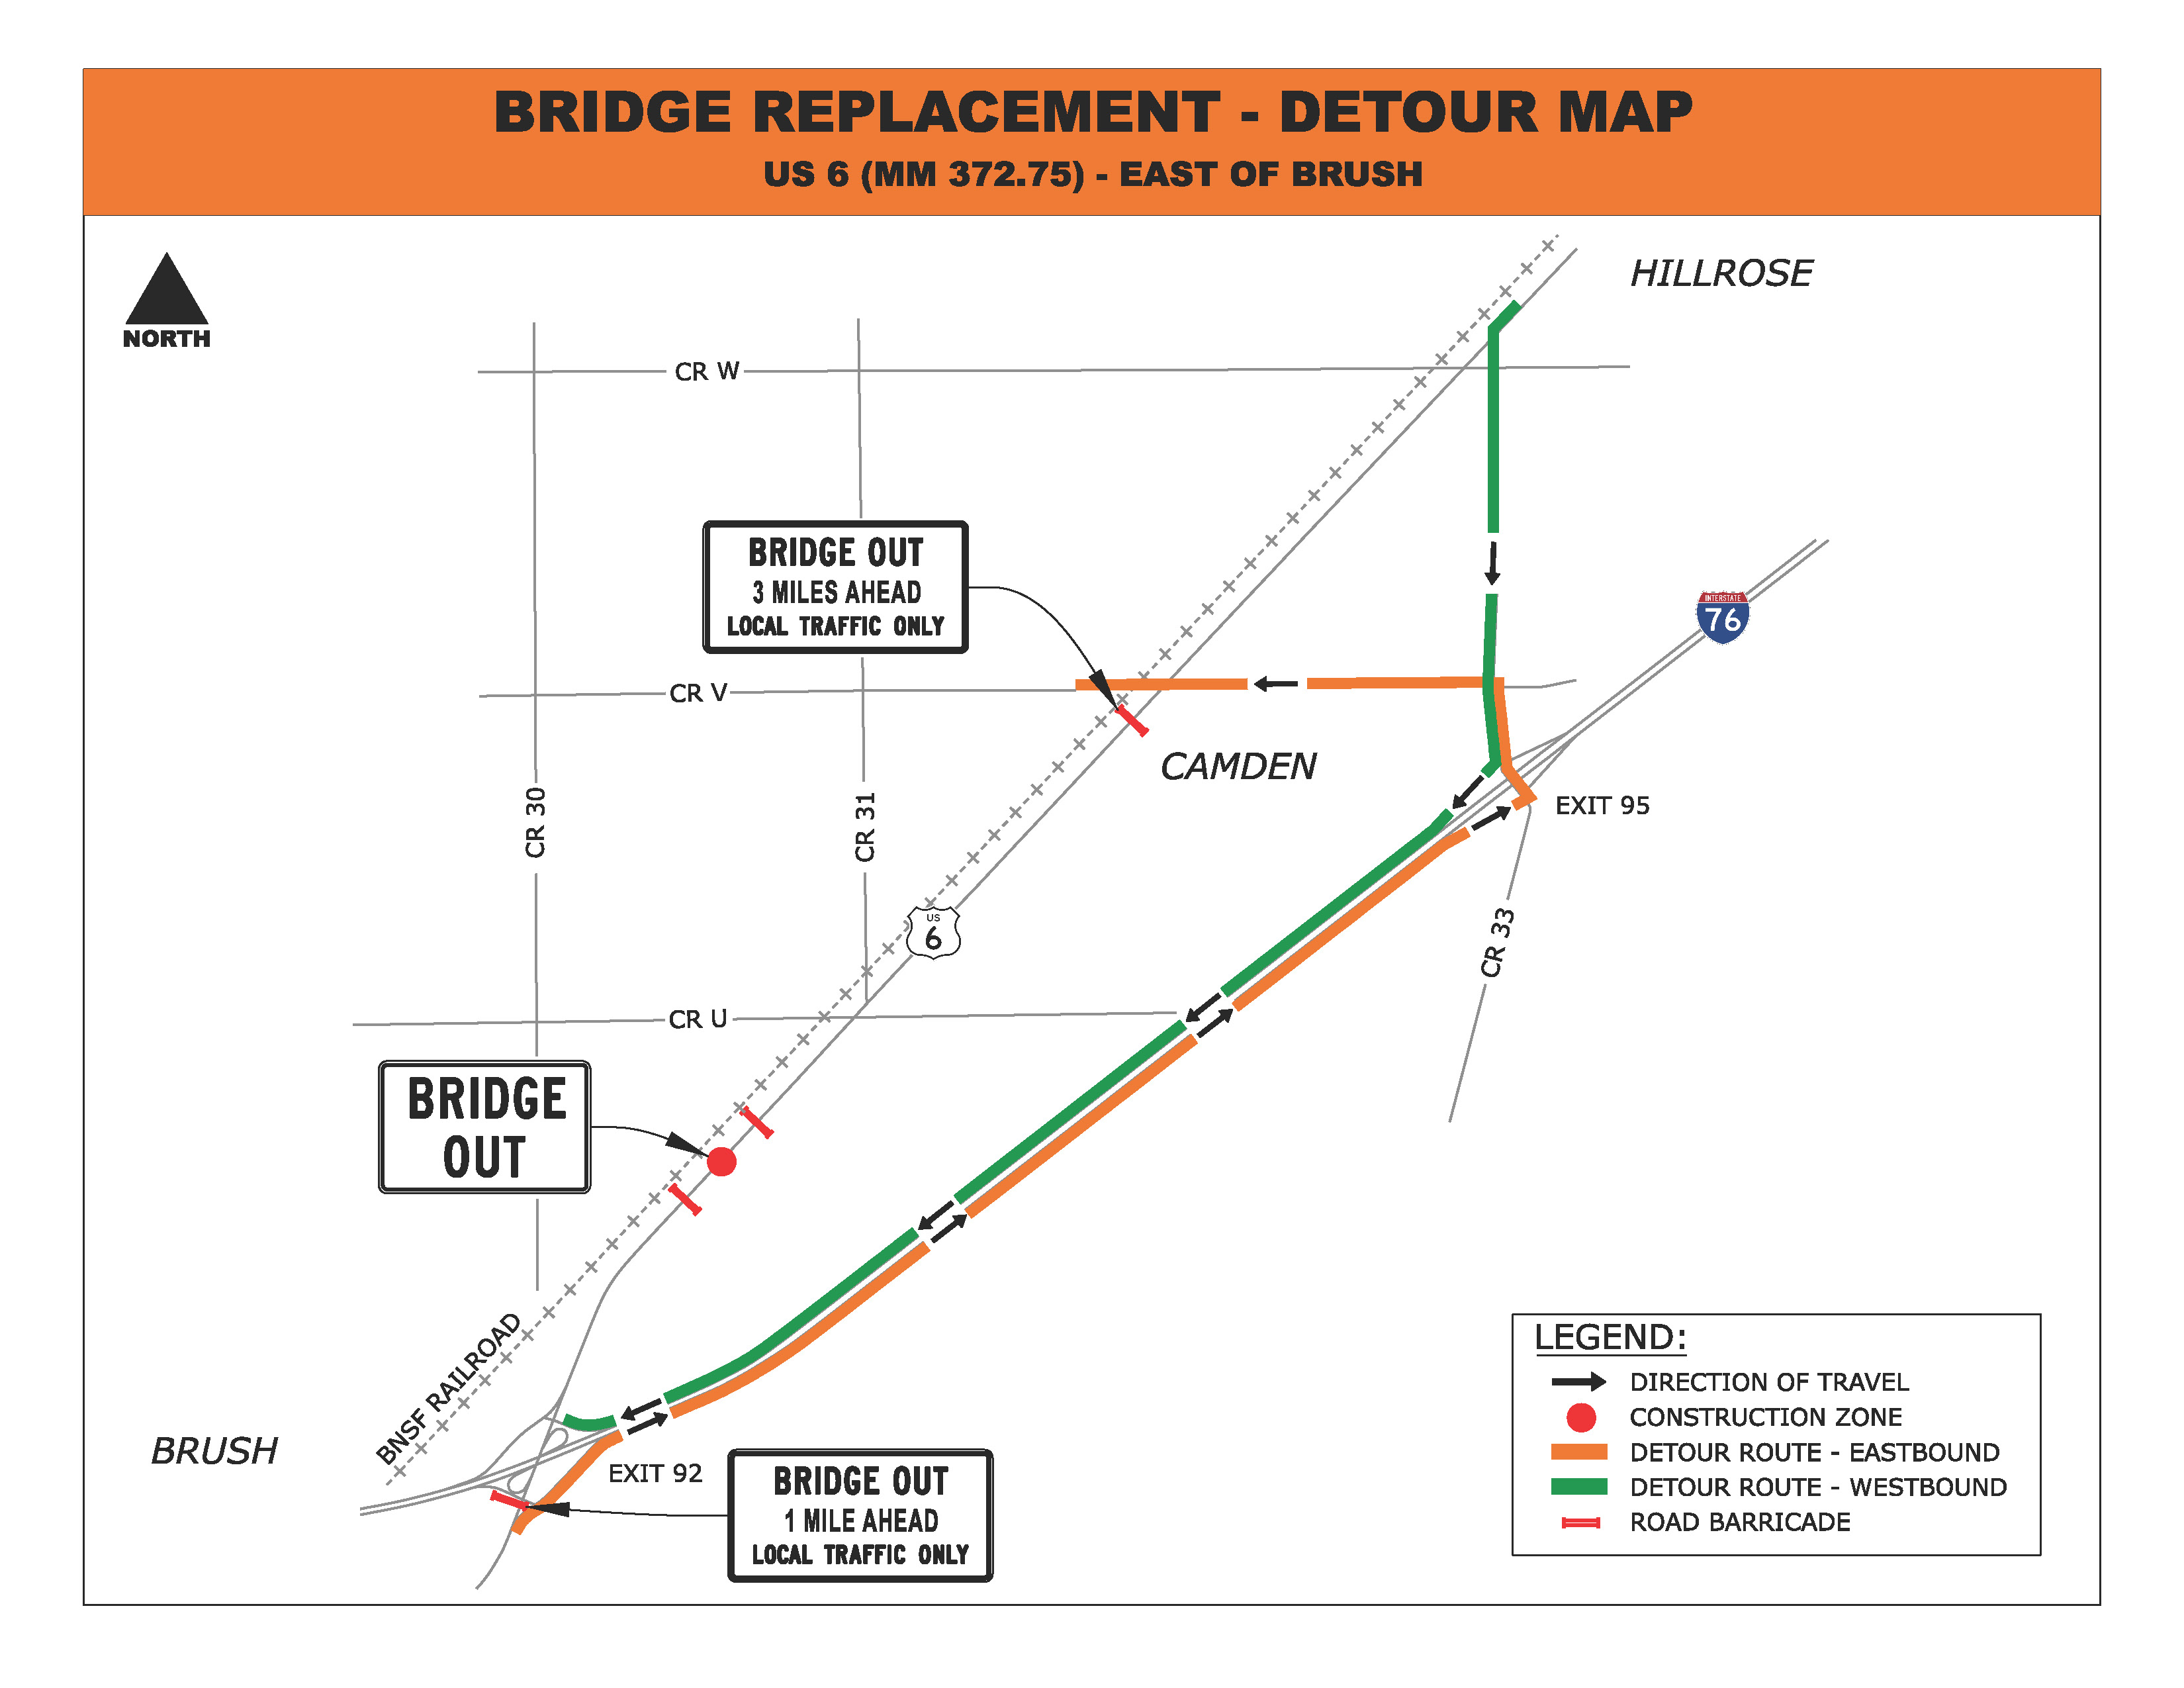 US 6 bridge replacement detour map.jpg detail image